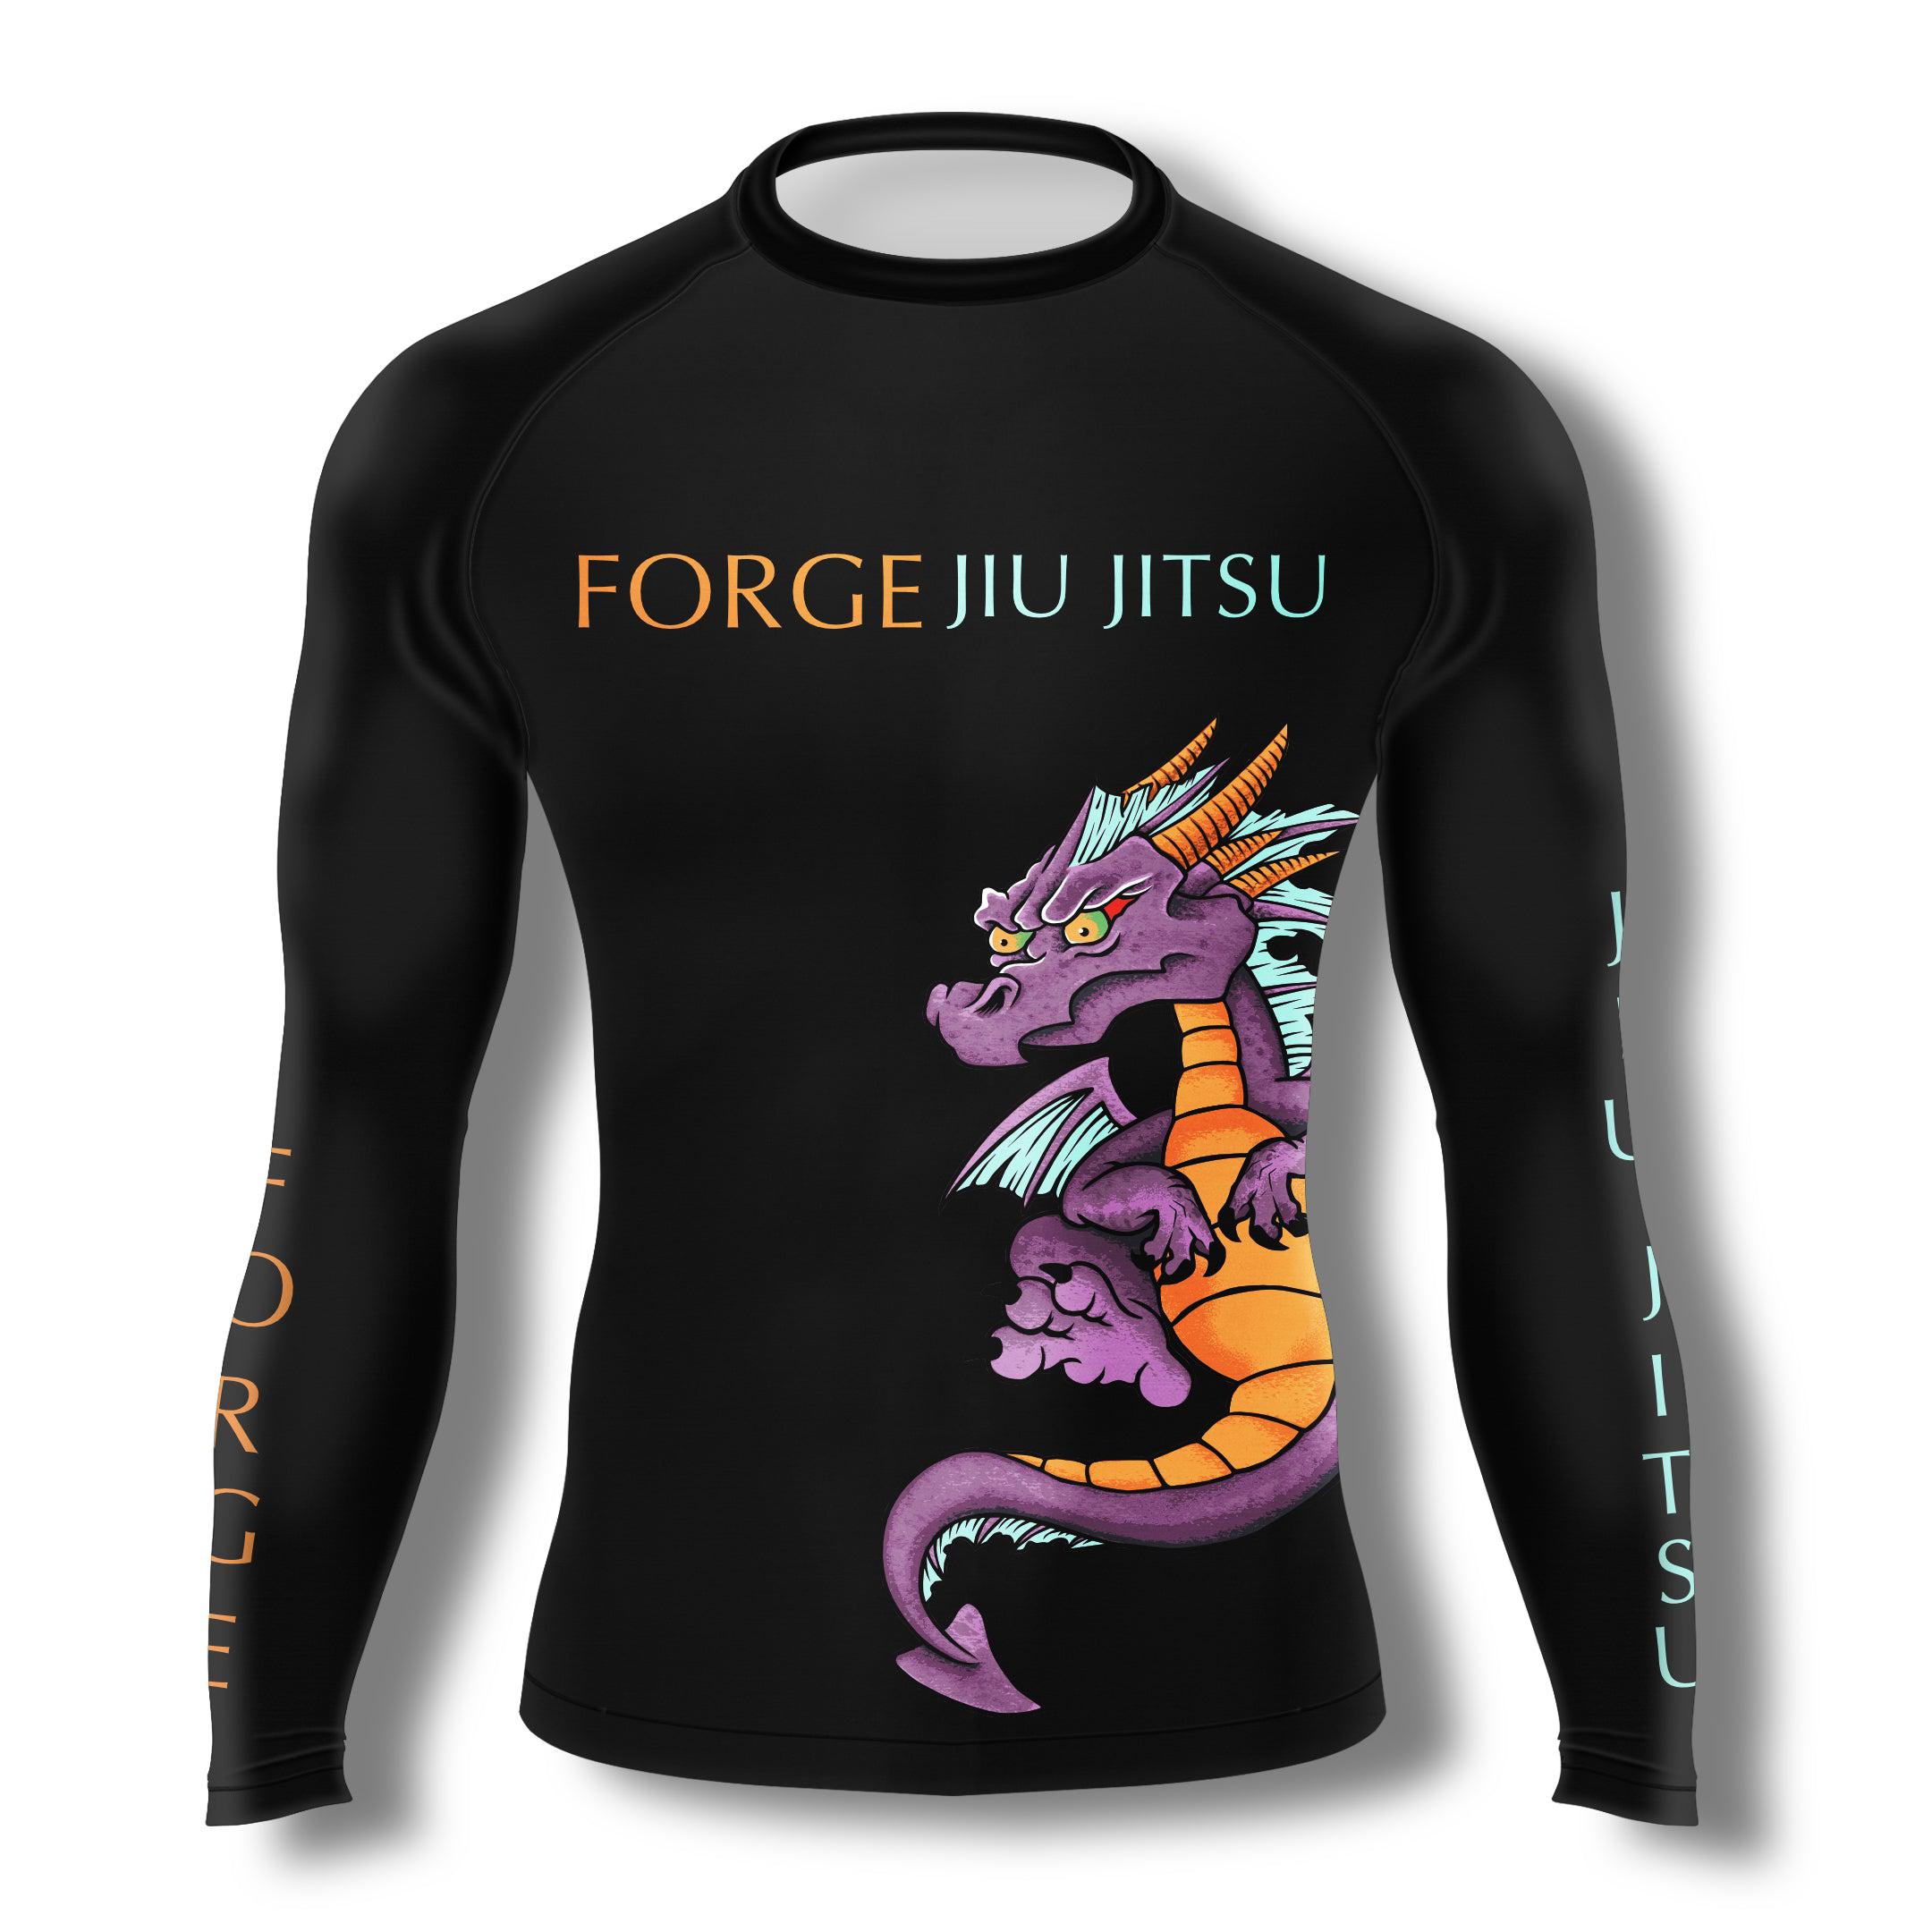 Forge Jiu Jitsu Baby Dragon Long Sleeve Rashguard - Zenko Fightwear